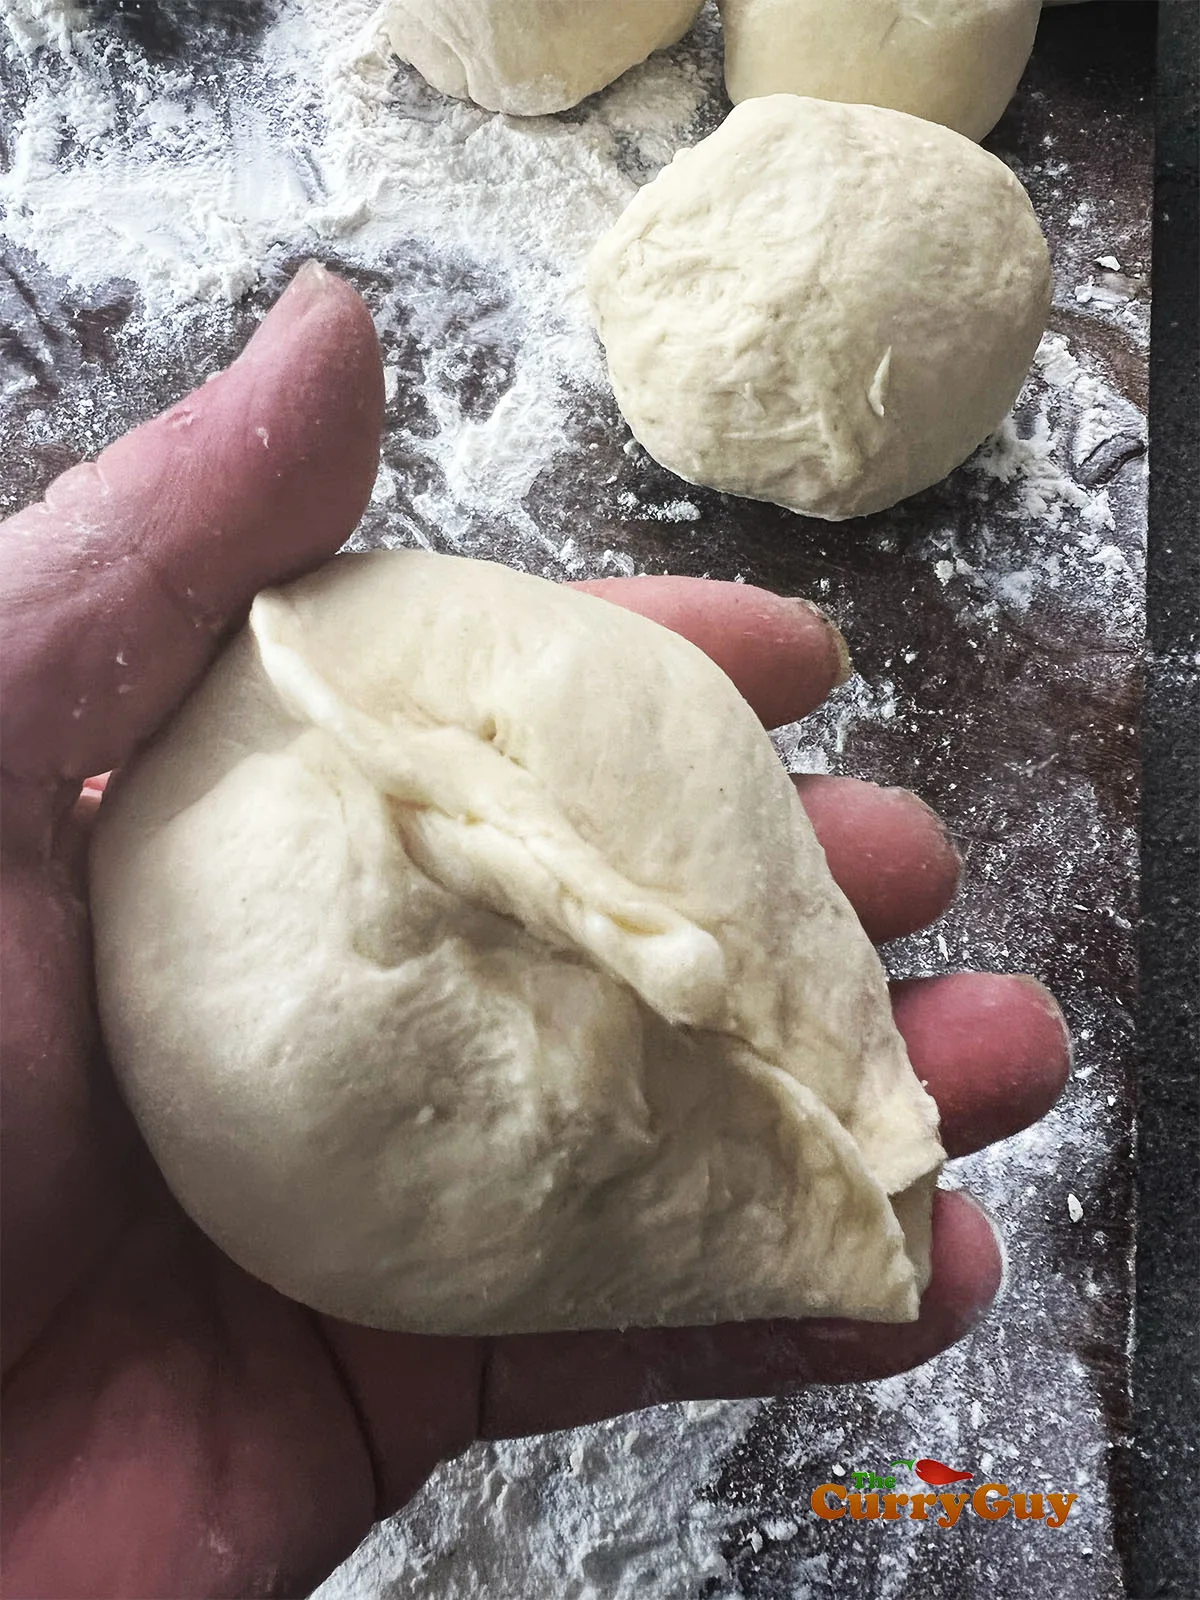 Filling encapsulated into a dough ball.